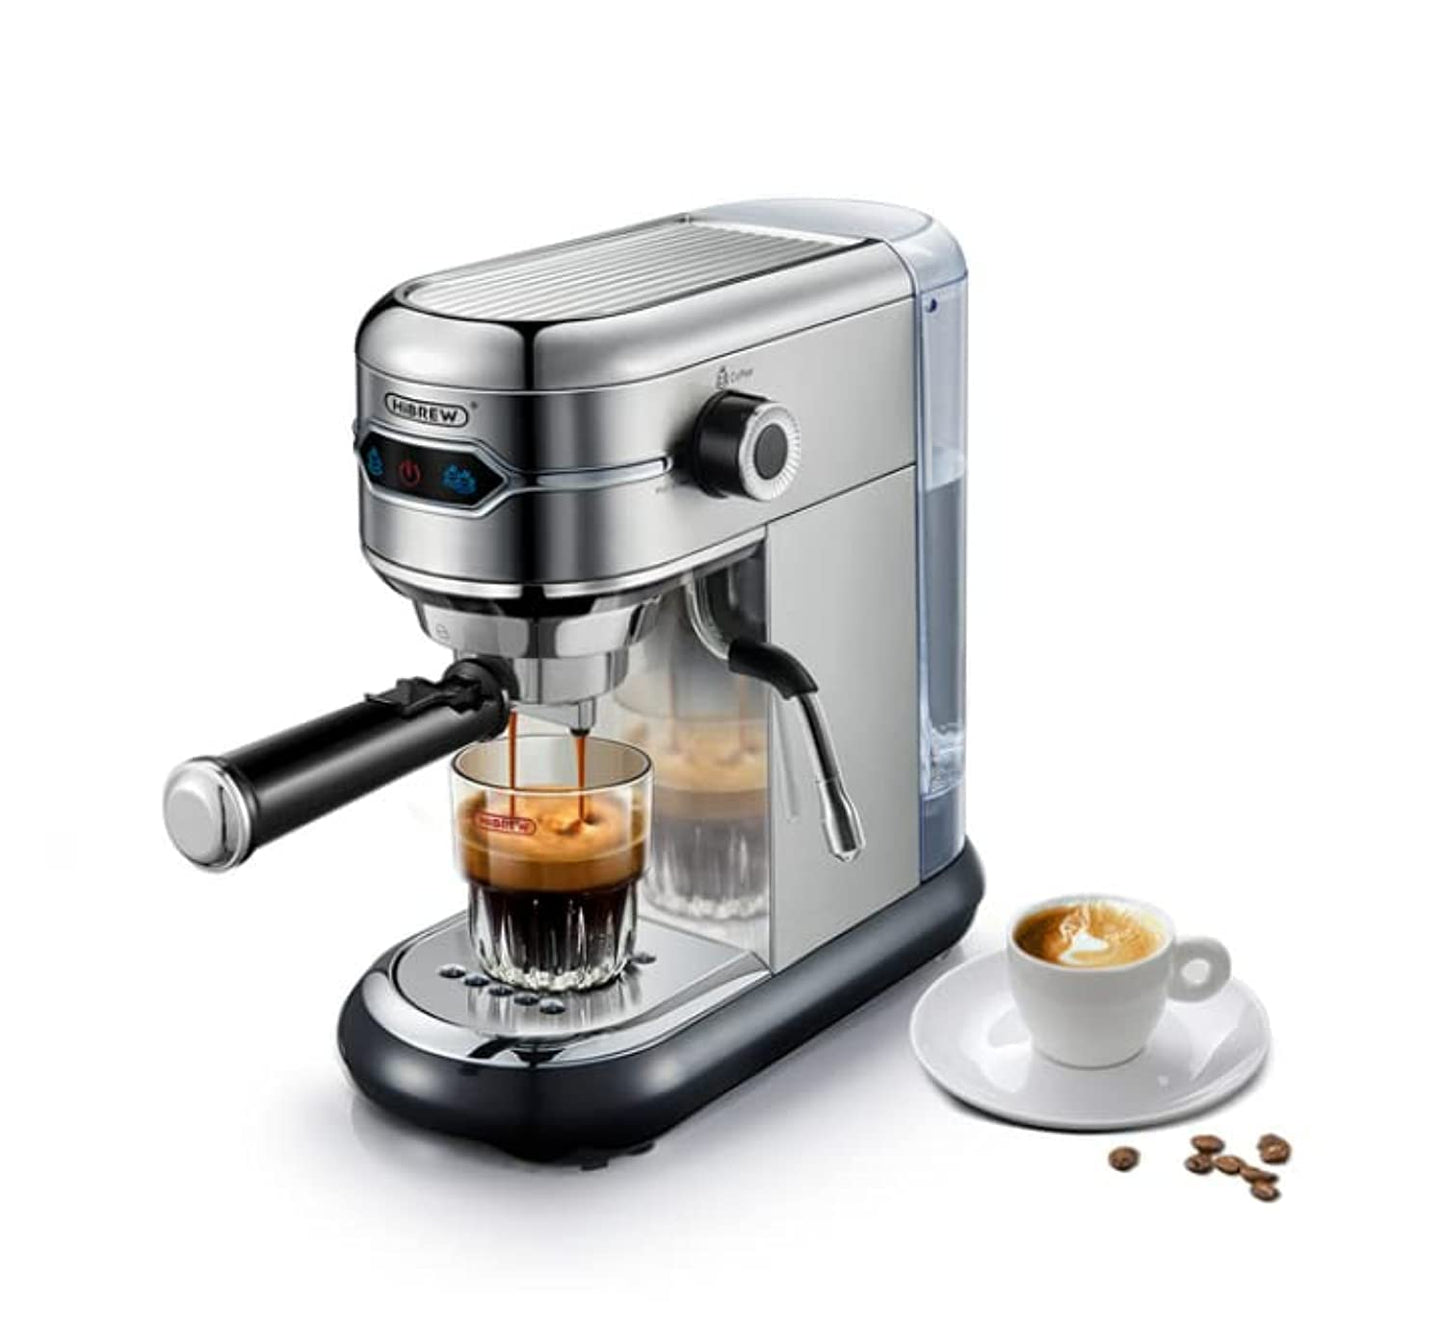 Nespresso Capsule Coffee Maker Essenza Mini Pure White C Water Tank Capacity 0.6L Compact Lightweight C30-WH-W